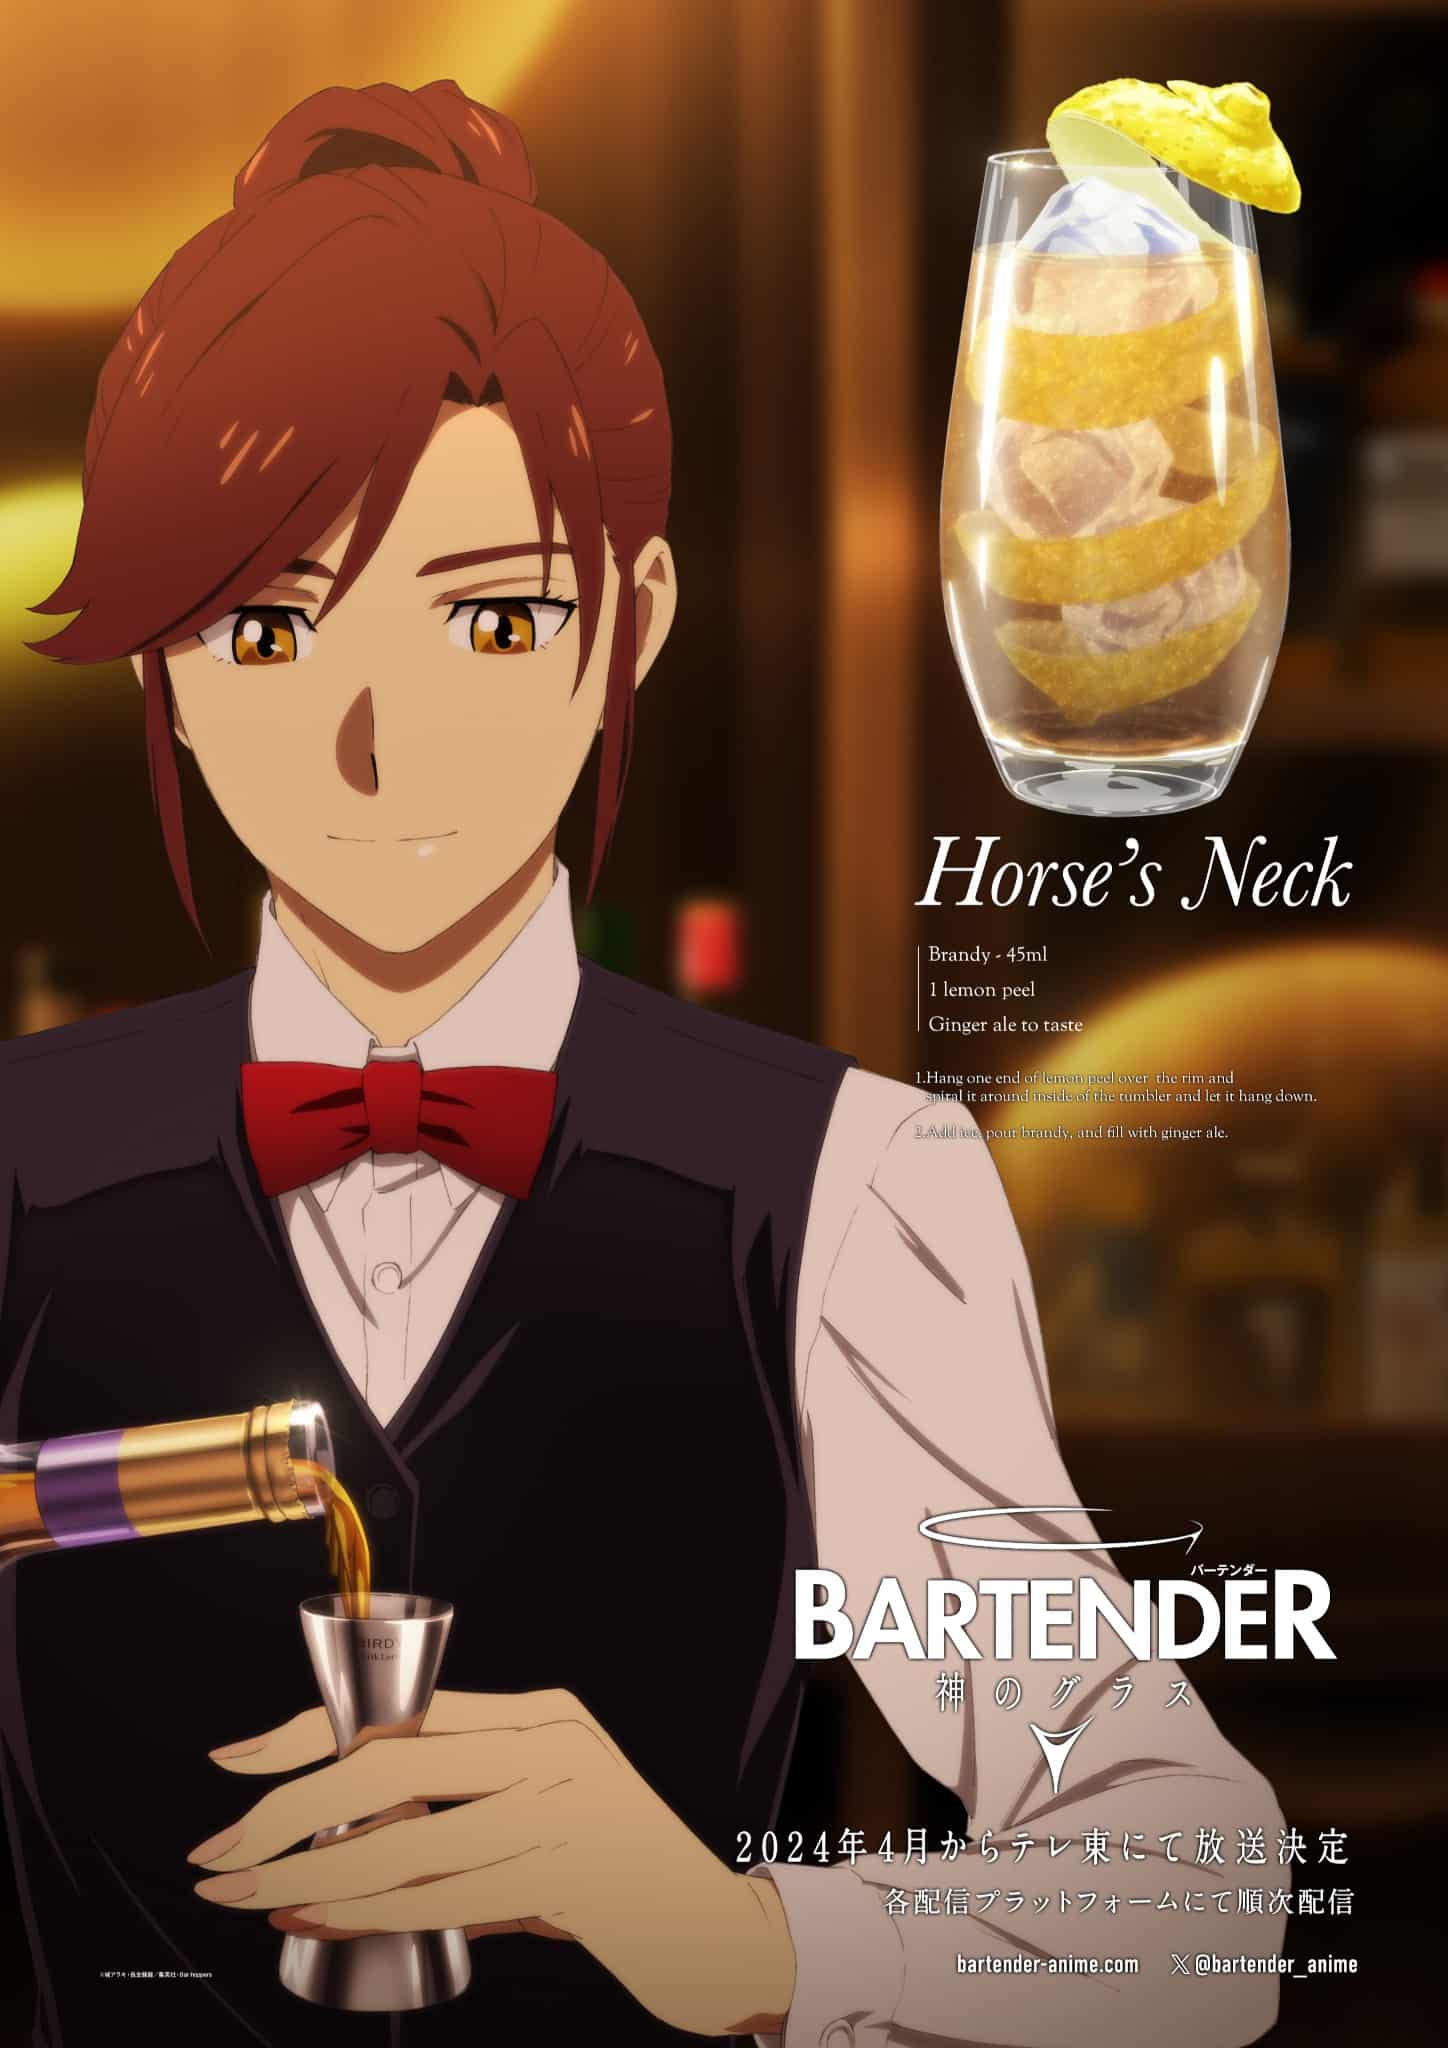 Visuel spécial Kyoko Kawakami pour l'anime Bartender 2024